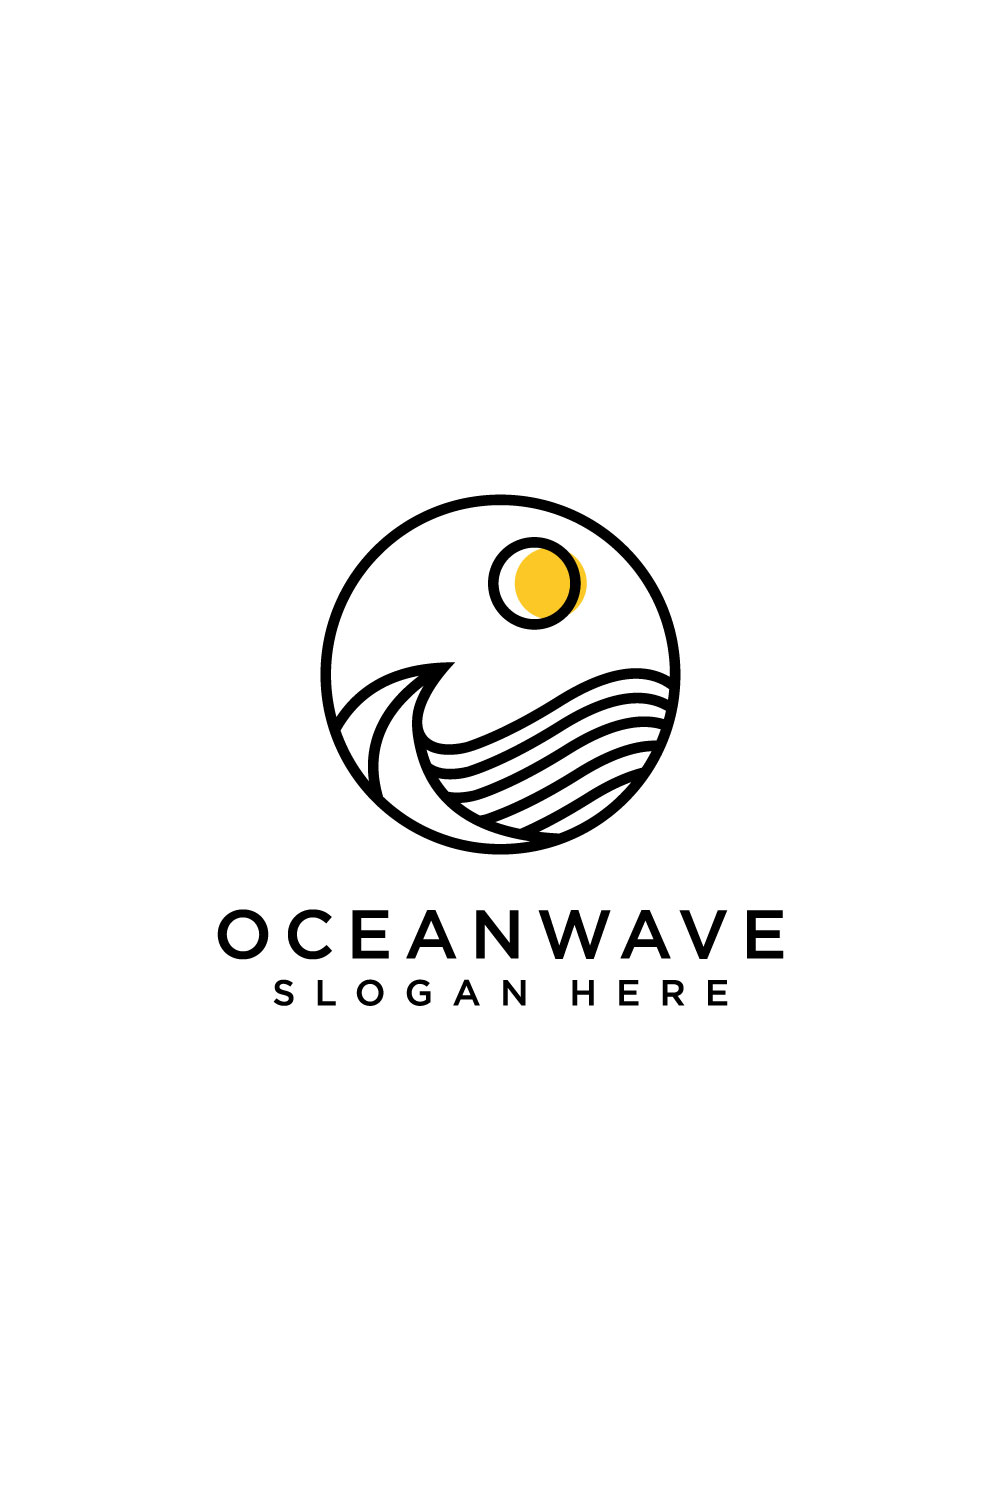 ocean wave logo design vector pinterest preview image.